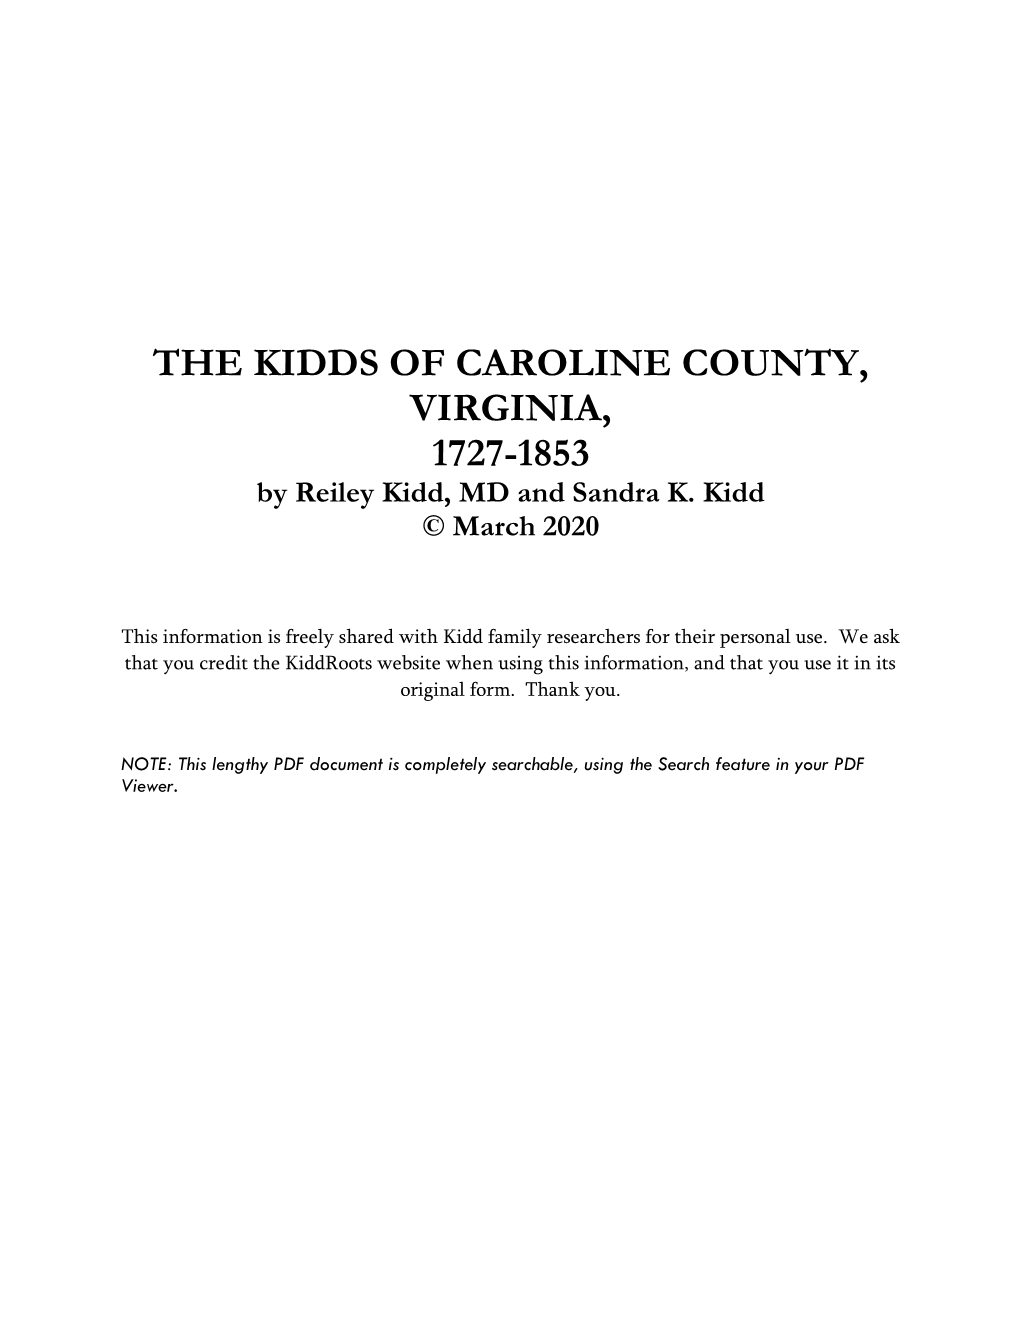 Caroline County Virginia Kidds